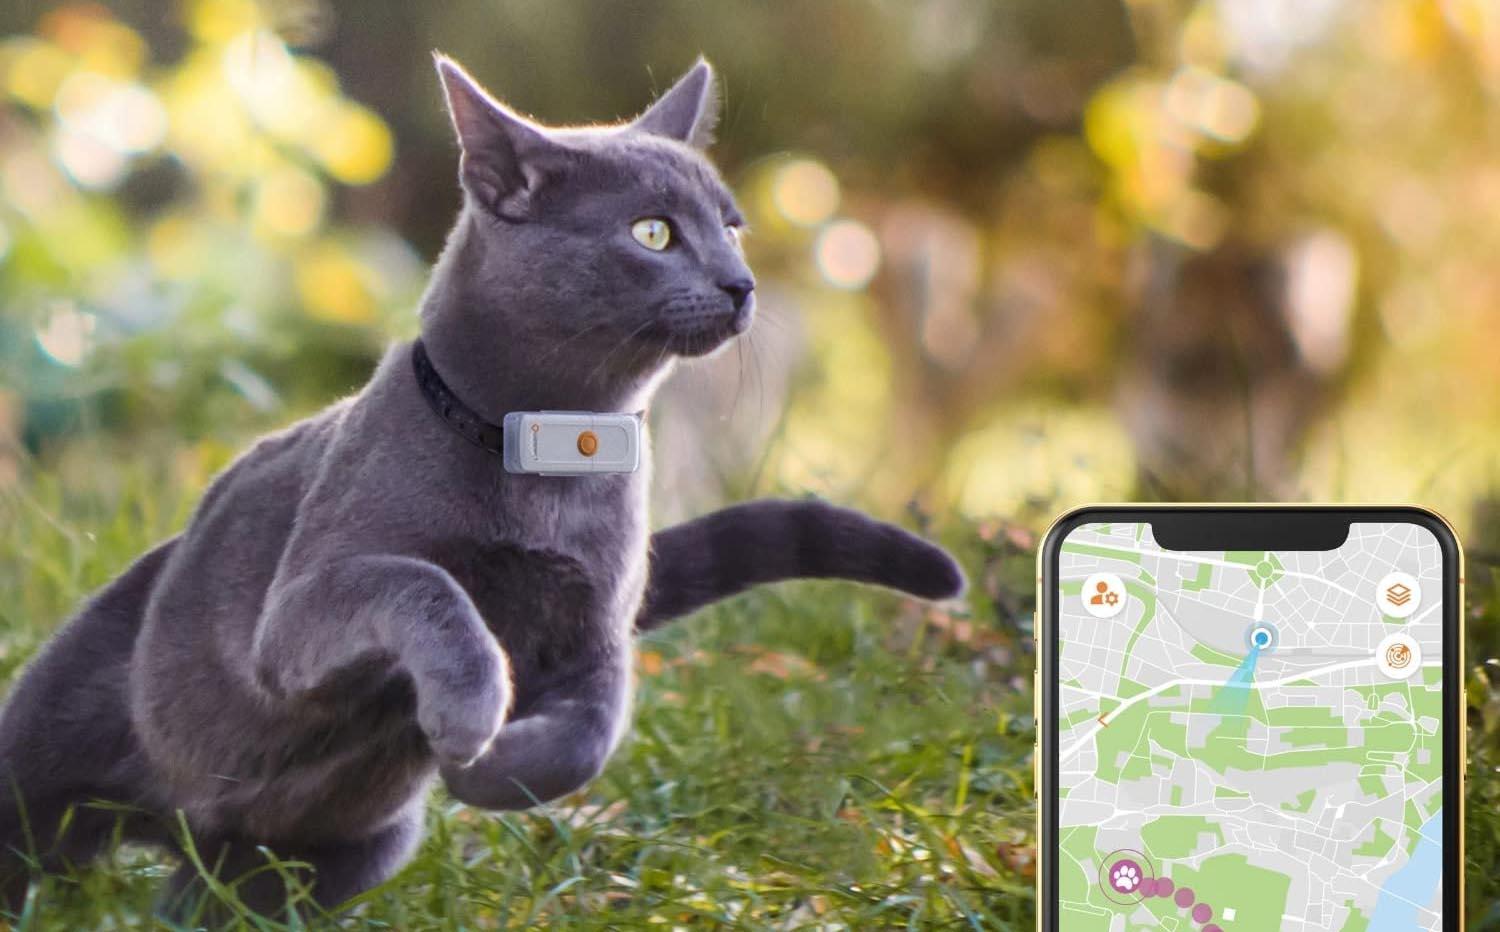 Localiza a tu perro en todo momento con un microchip GPS - Agps